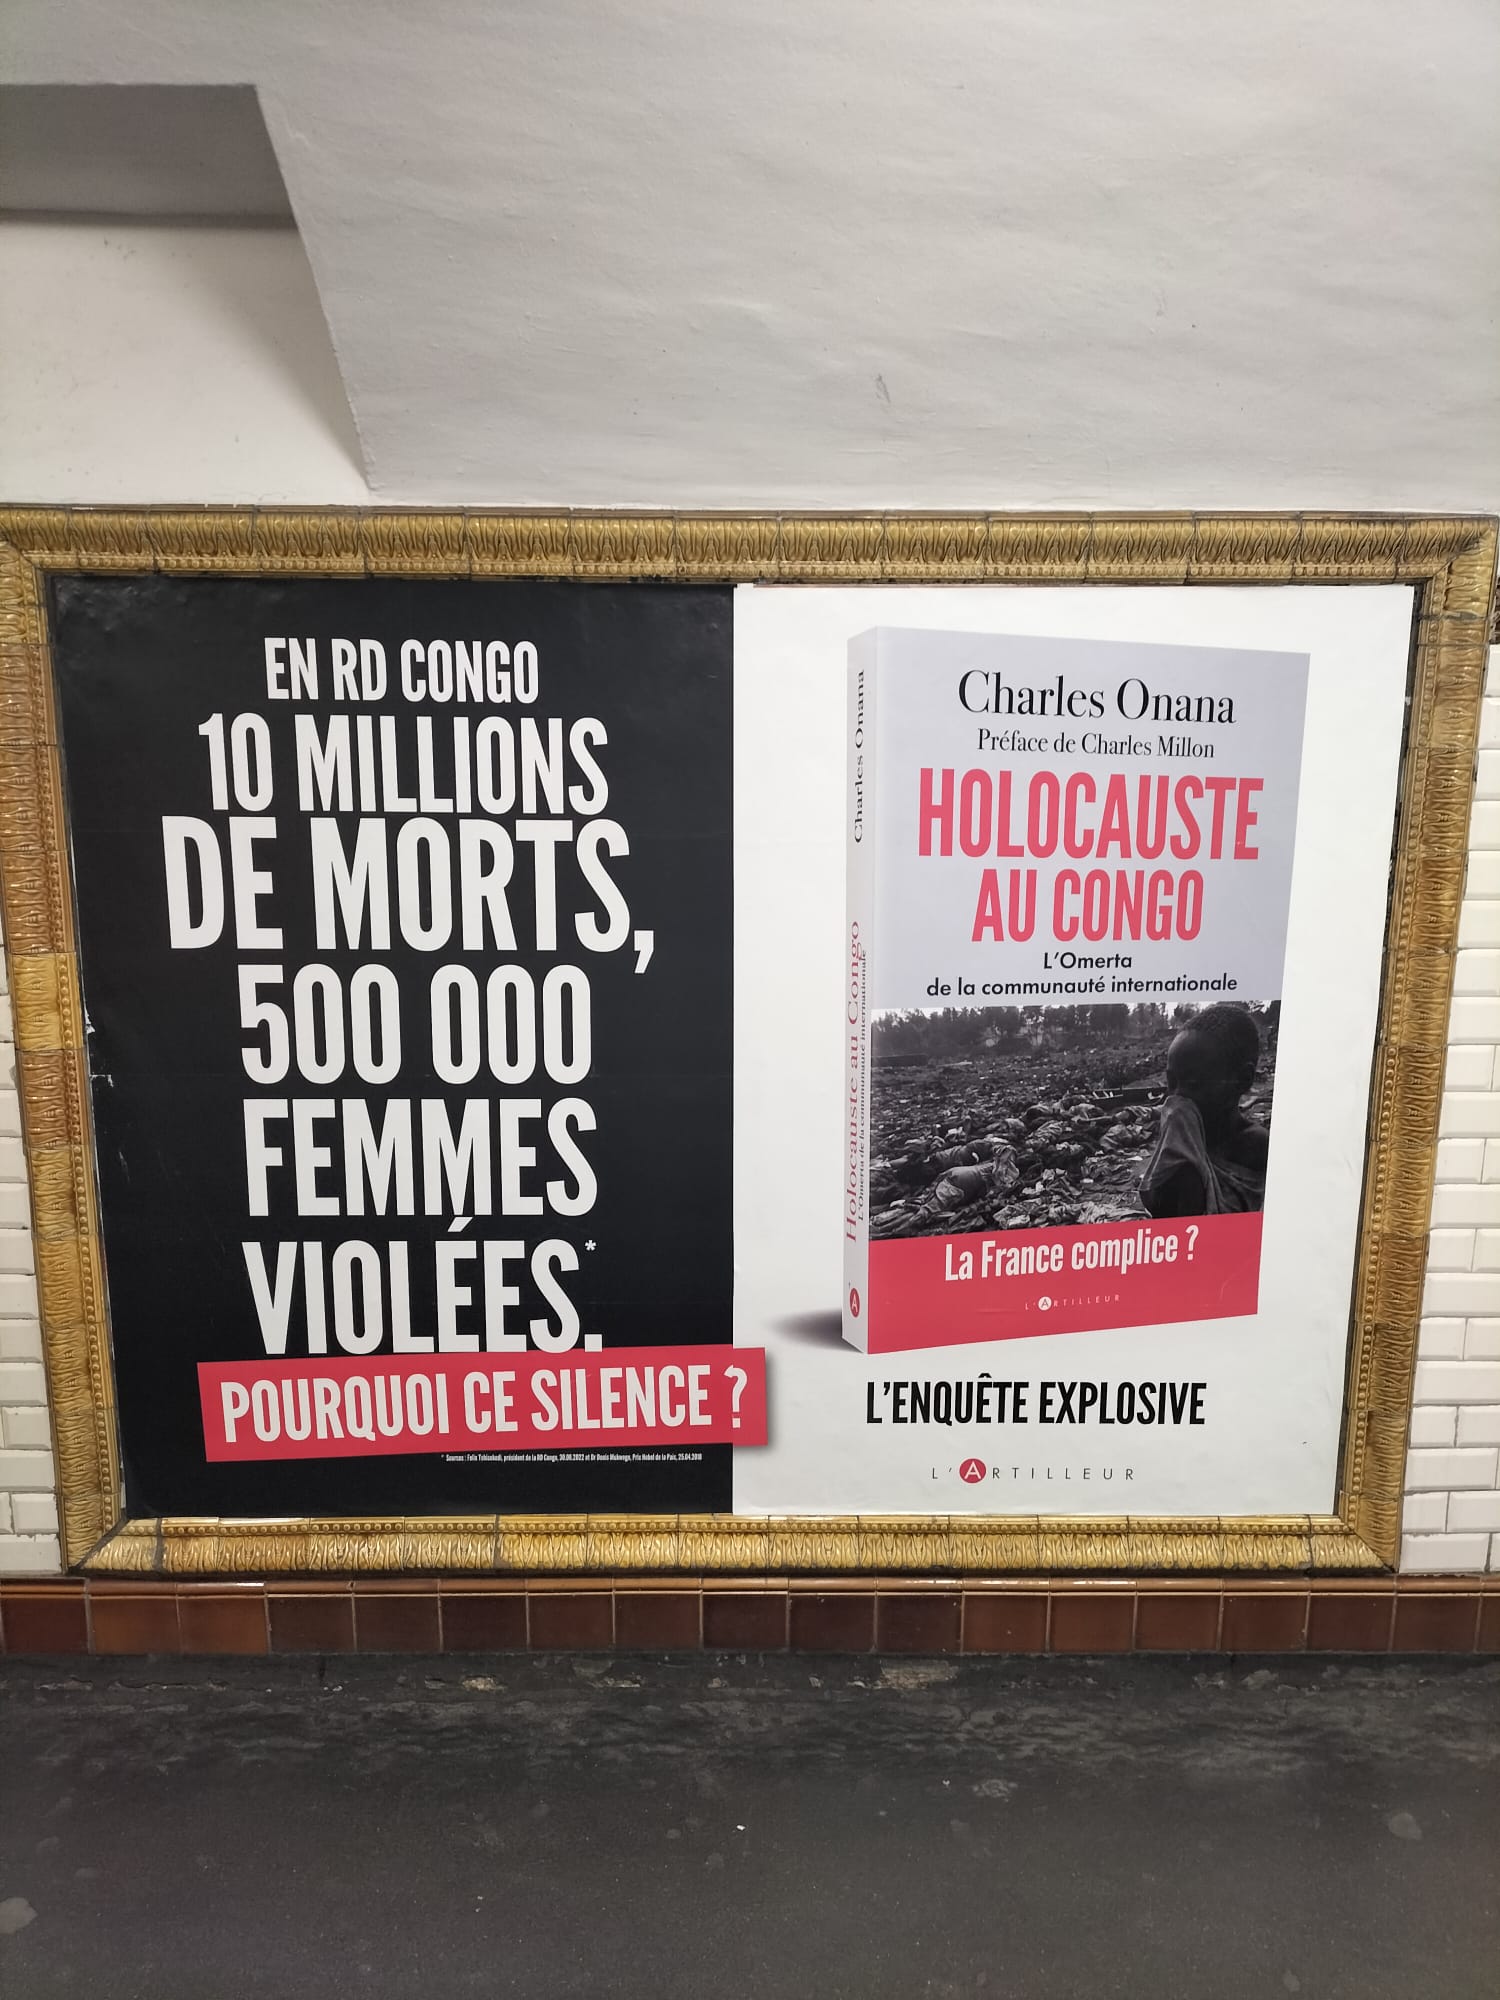 Holocauste au Congo: L'Omerta de la communauté internationale”: l